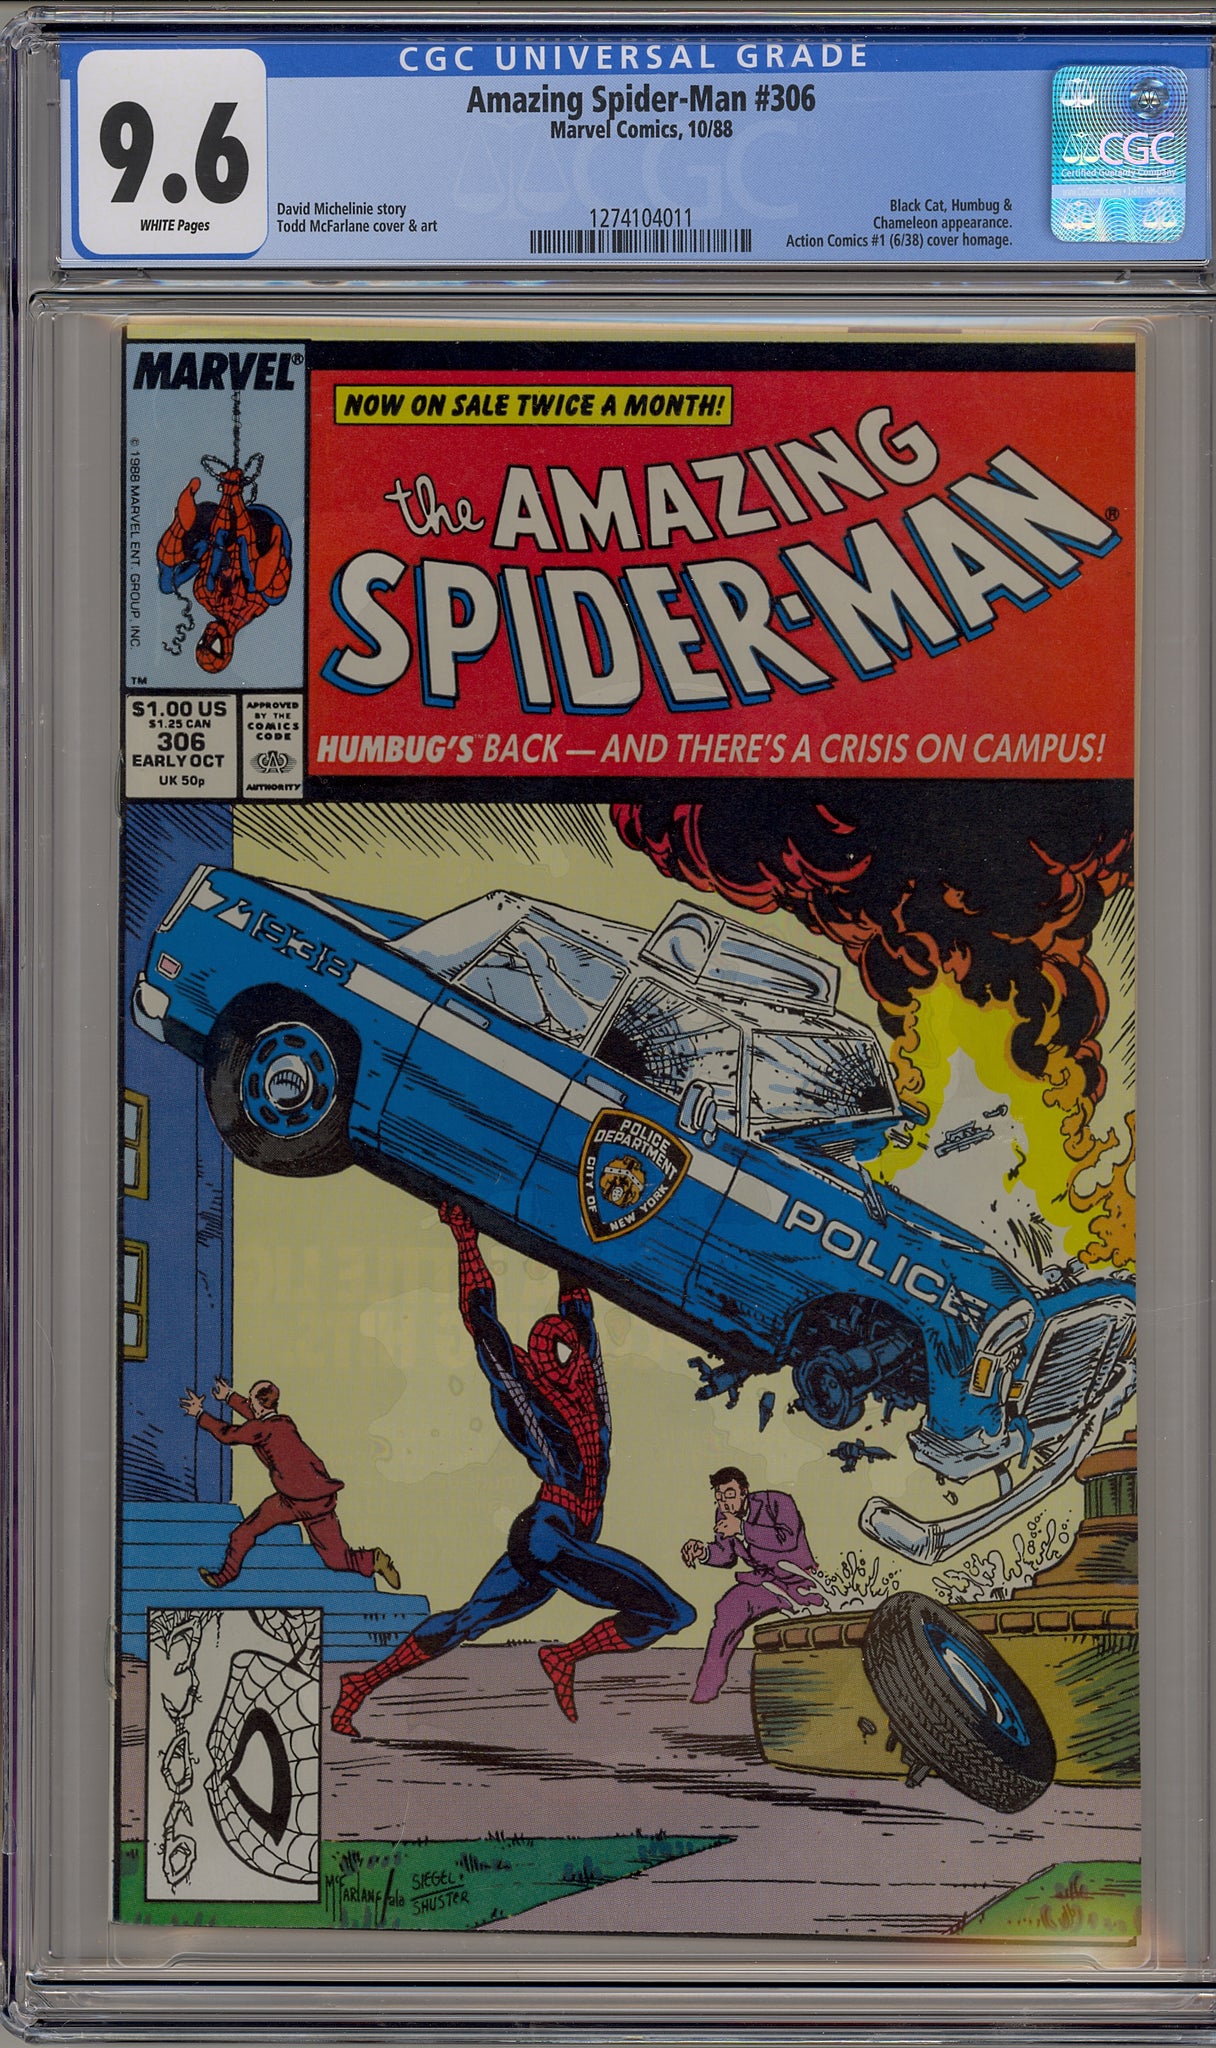 Amazing Spider-Man #306 (1988) Action Comics #3 homage